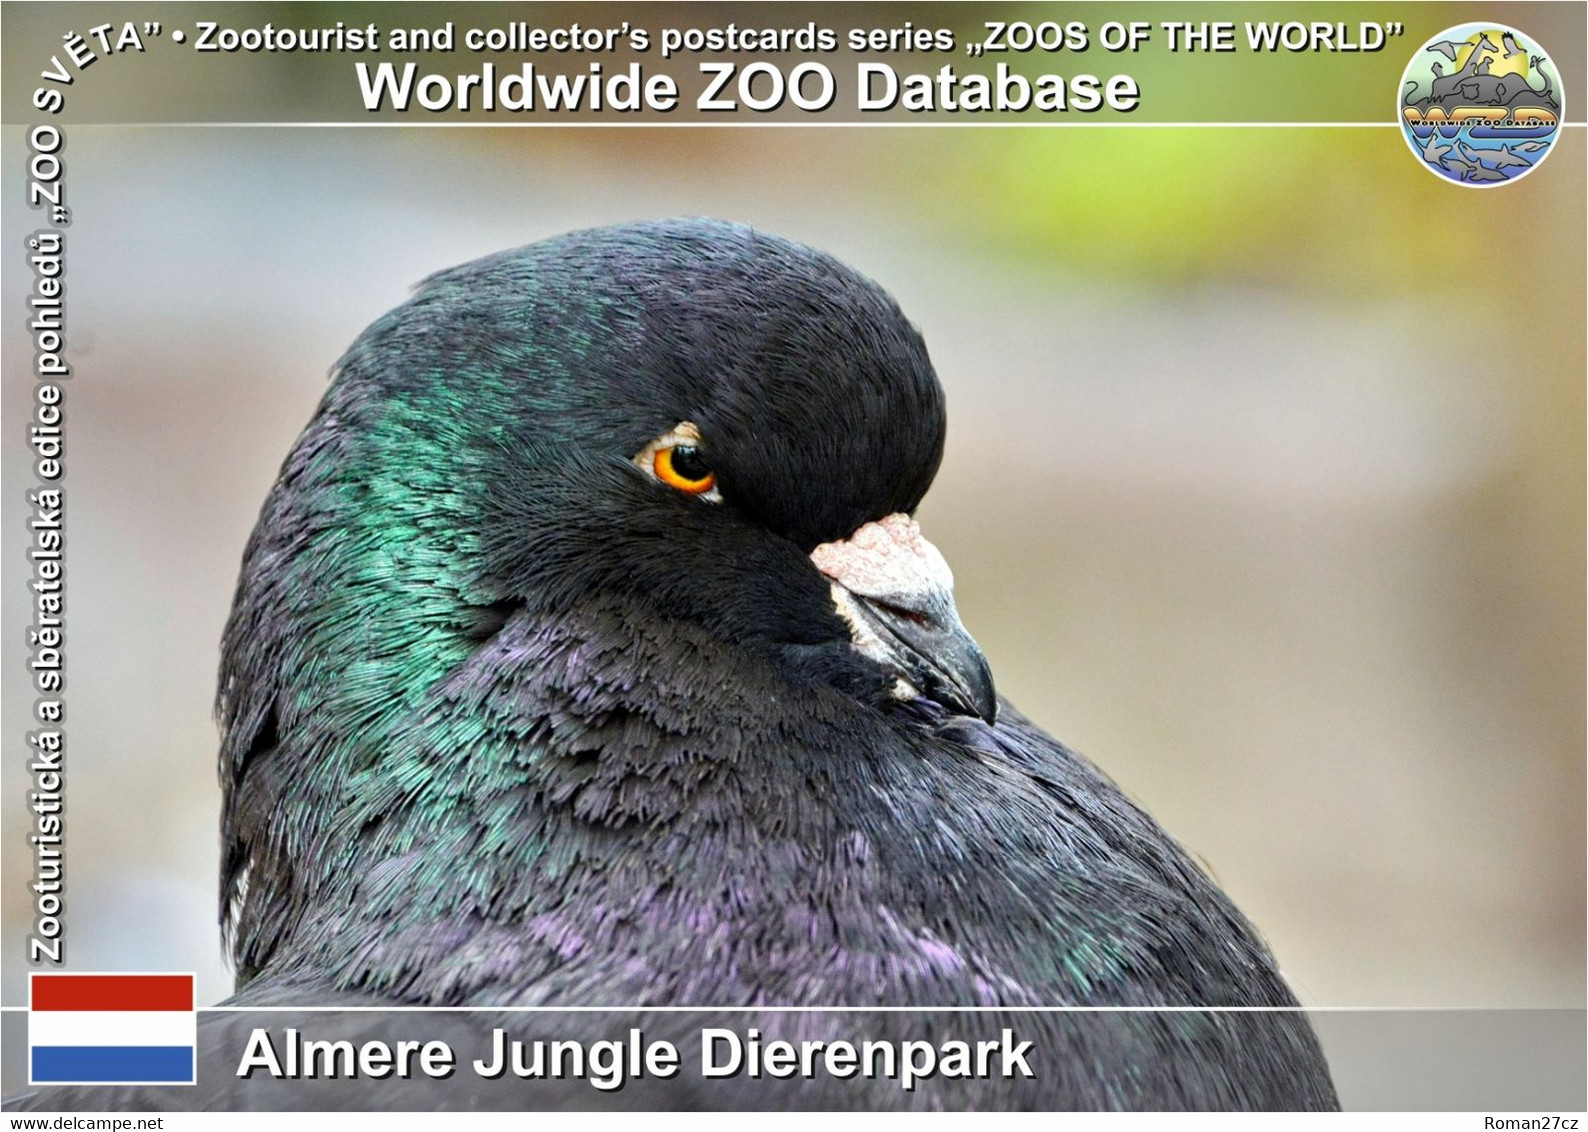 01226 Almere Jungle Dierenpark, NL - King Pigeon (Columba Livia F. Domestica "King") - Almere